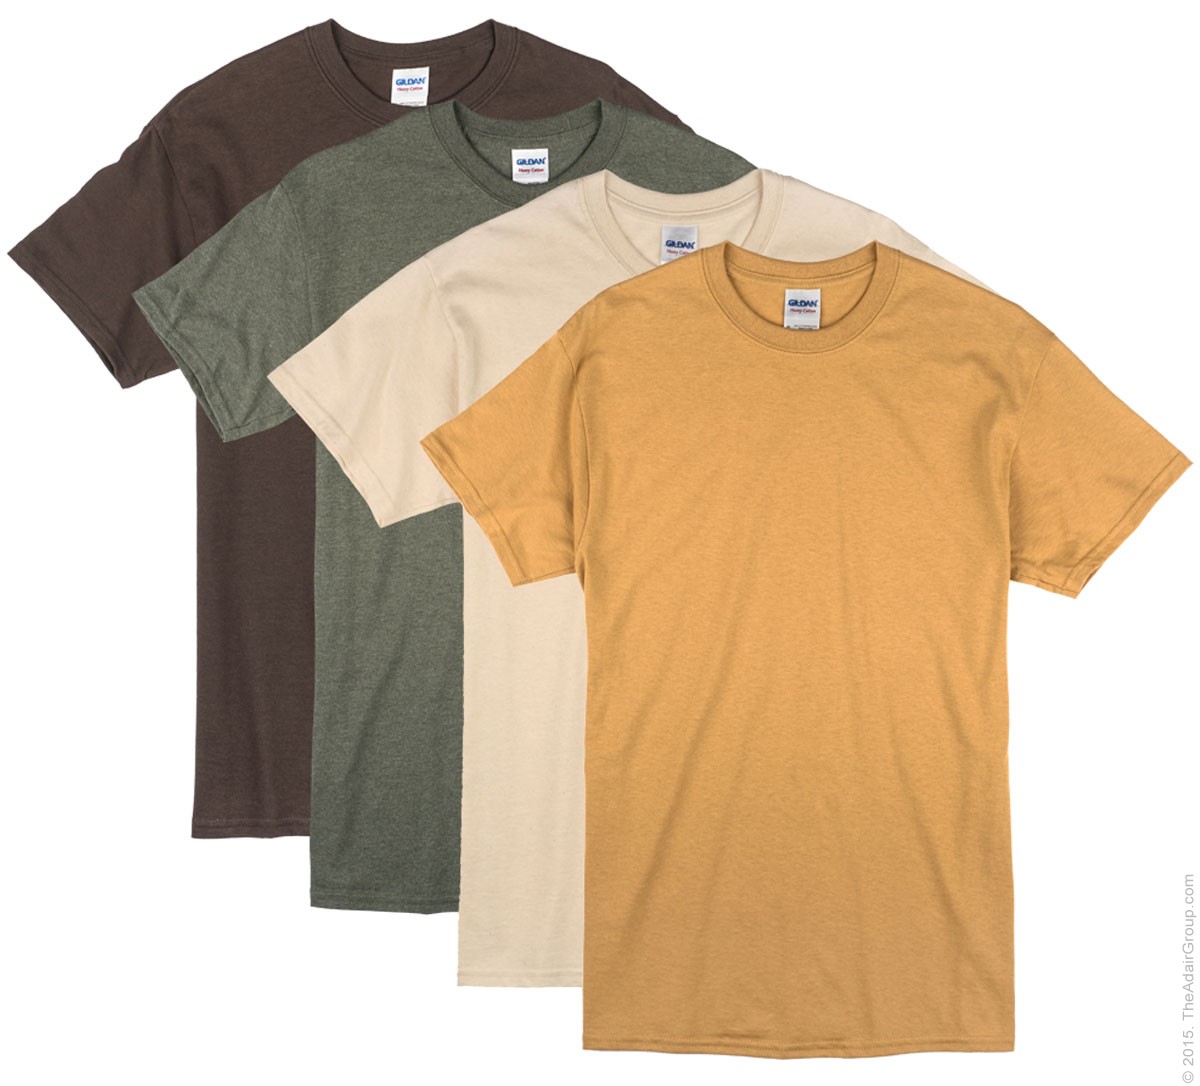 Tone T-Shirts | The Adair Group